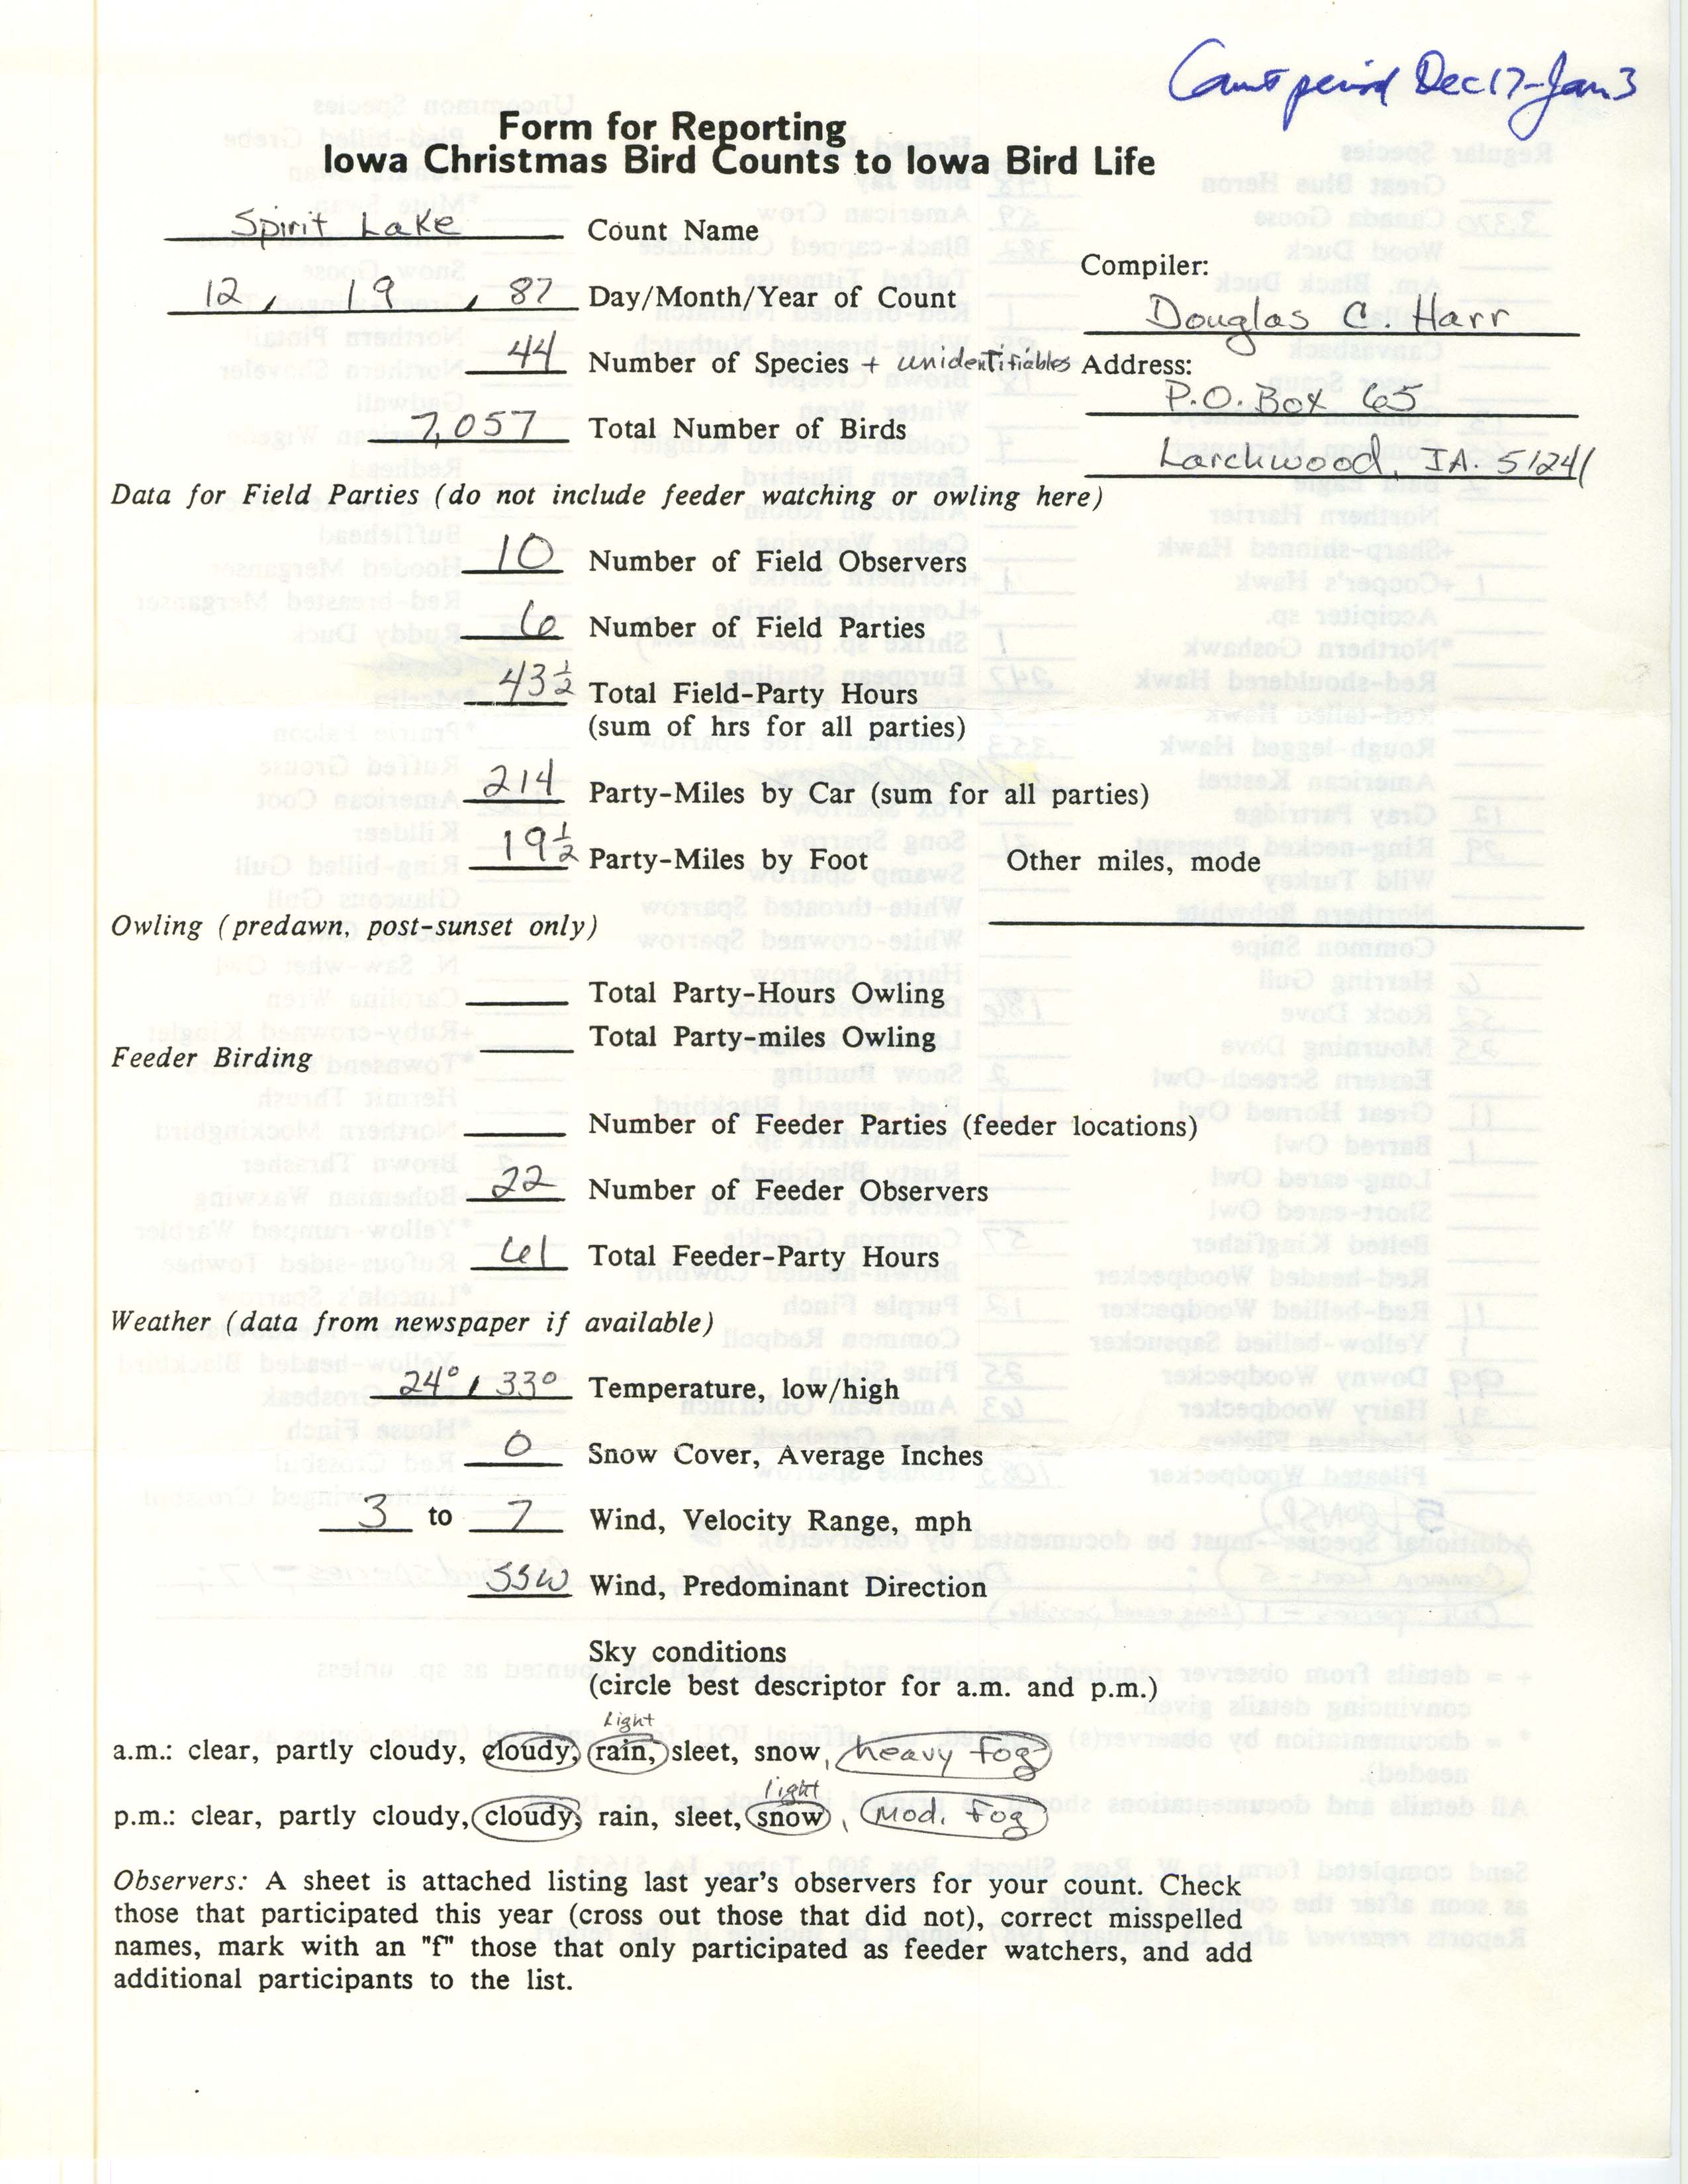 Form for reporting Iowa Christmas bird counts to Iowa Bird Life, Douglas C. Harr, December 19, 1987